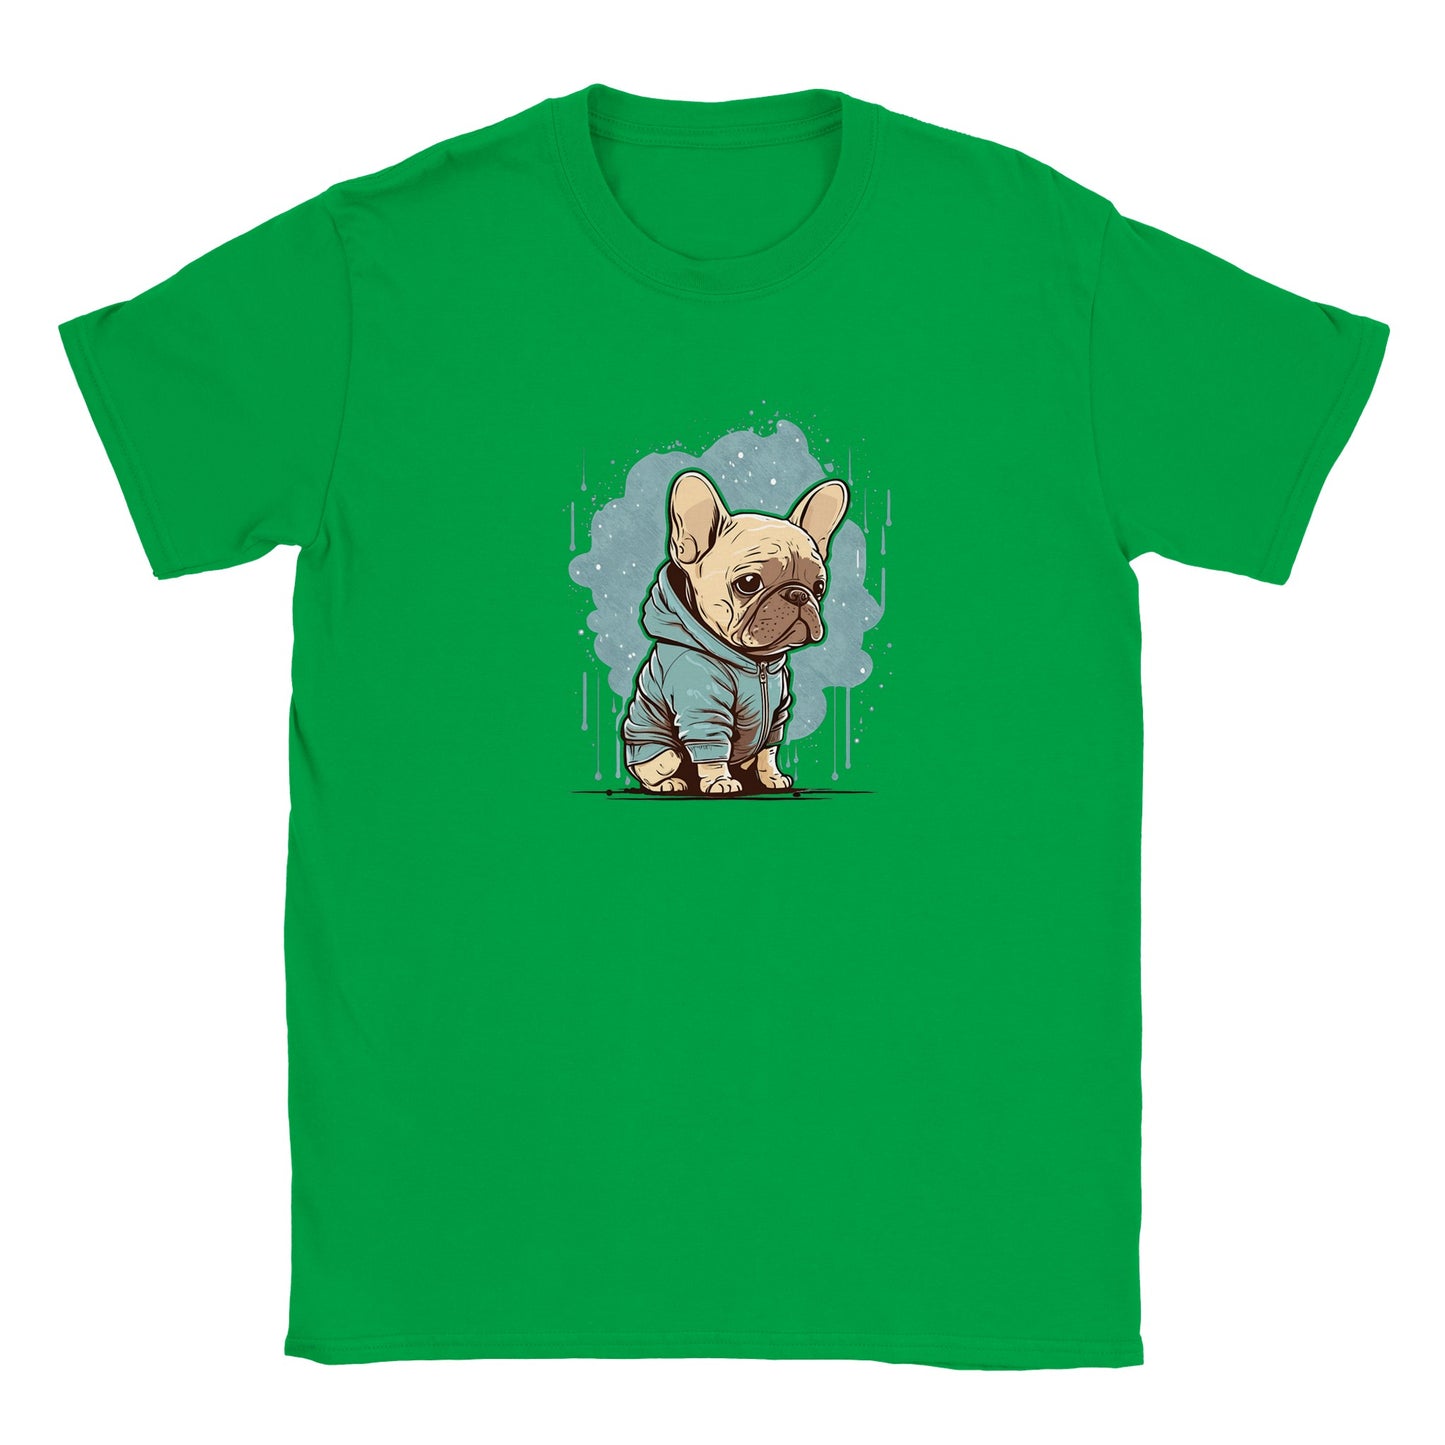 Børne T-shirt - Lys Fransk Bulldog light Hoodie Artwork - Klassisk Børne T-shirt